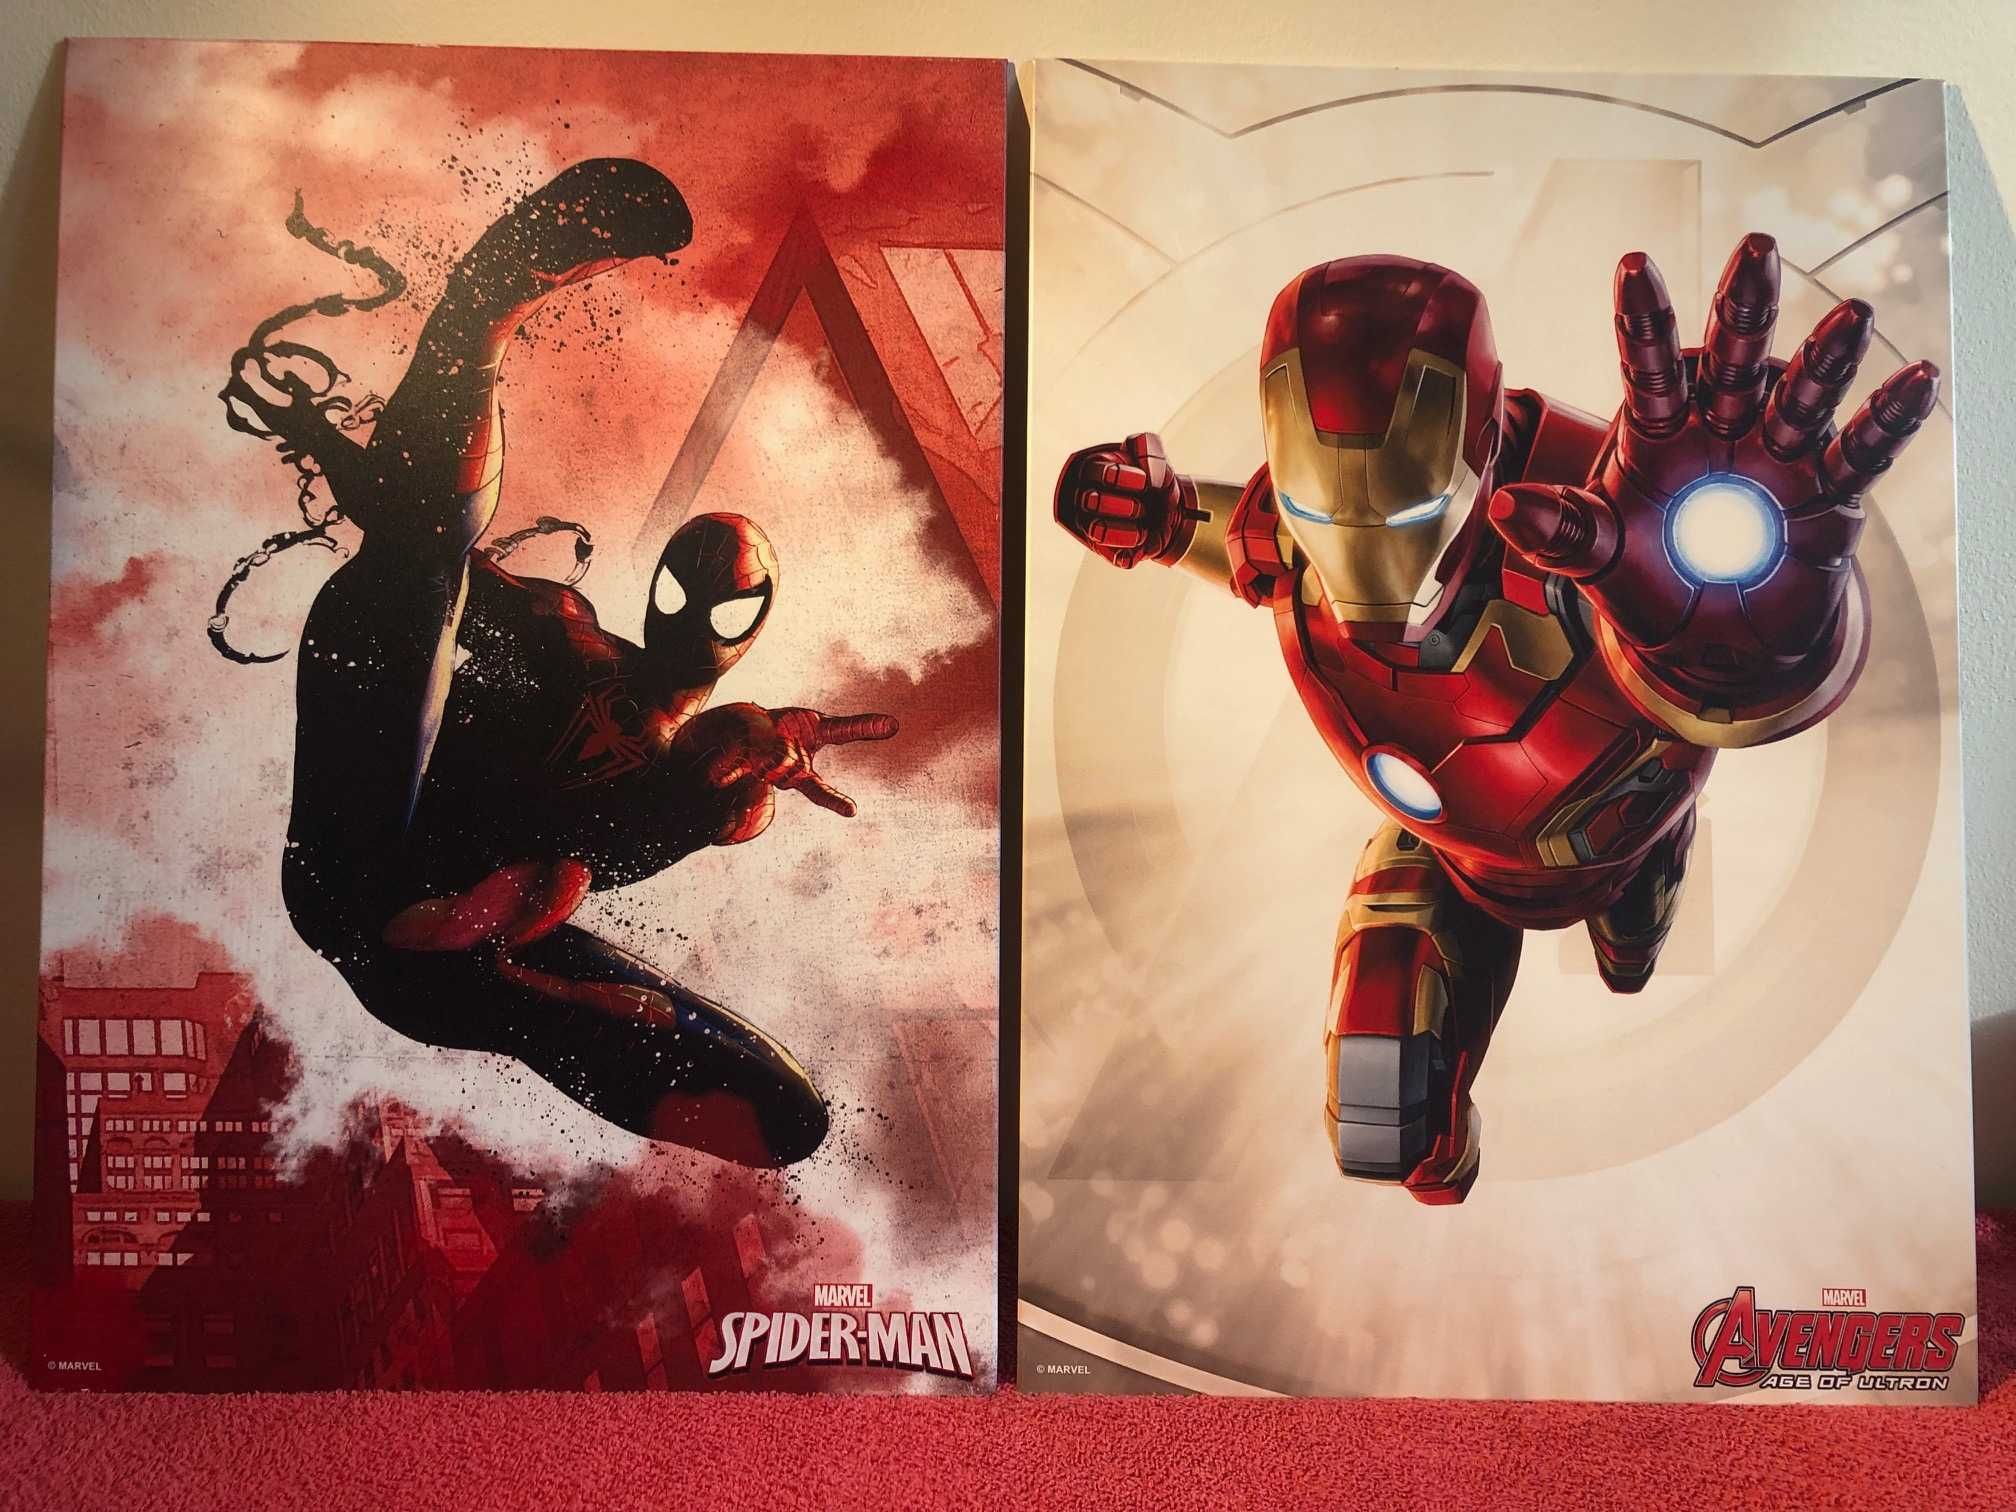 IronMan plakat Avengers Age of Ultron oryginalny PosterPlate metal